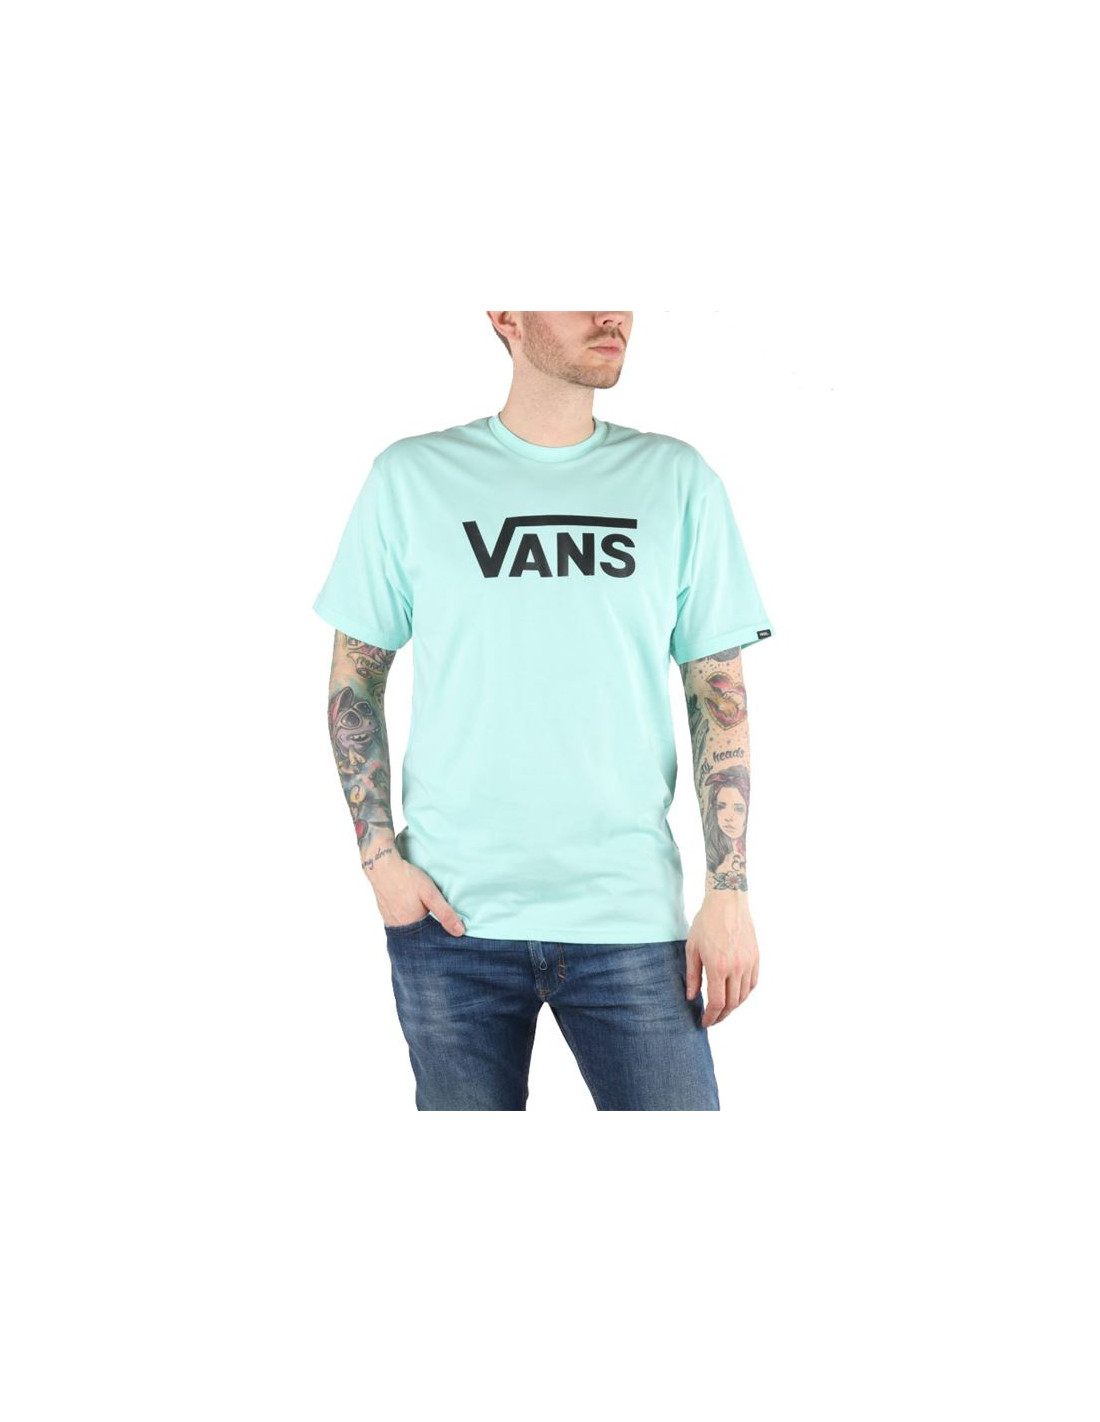 Camiseta vans drop v-b m light mind